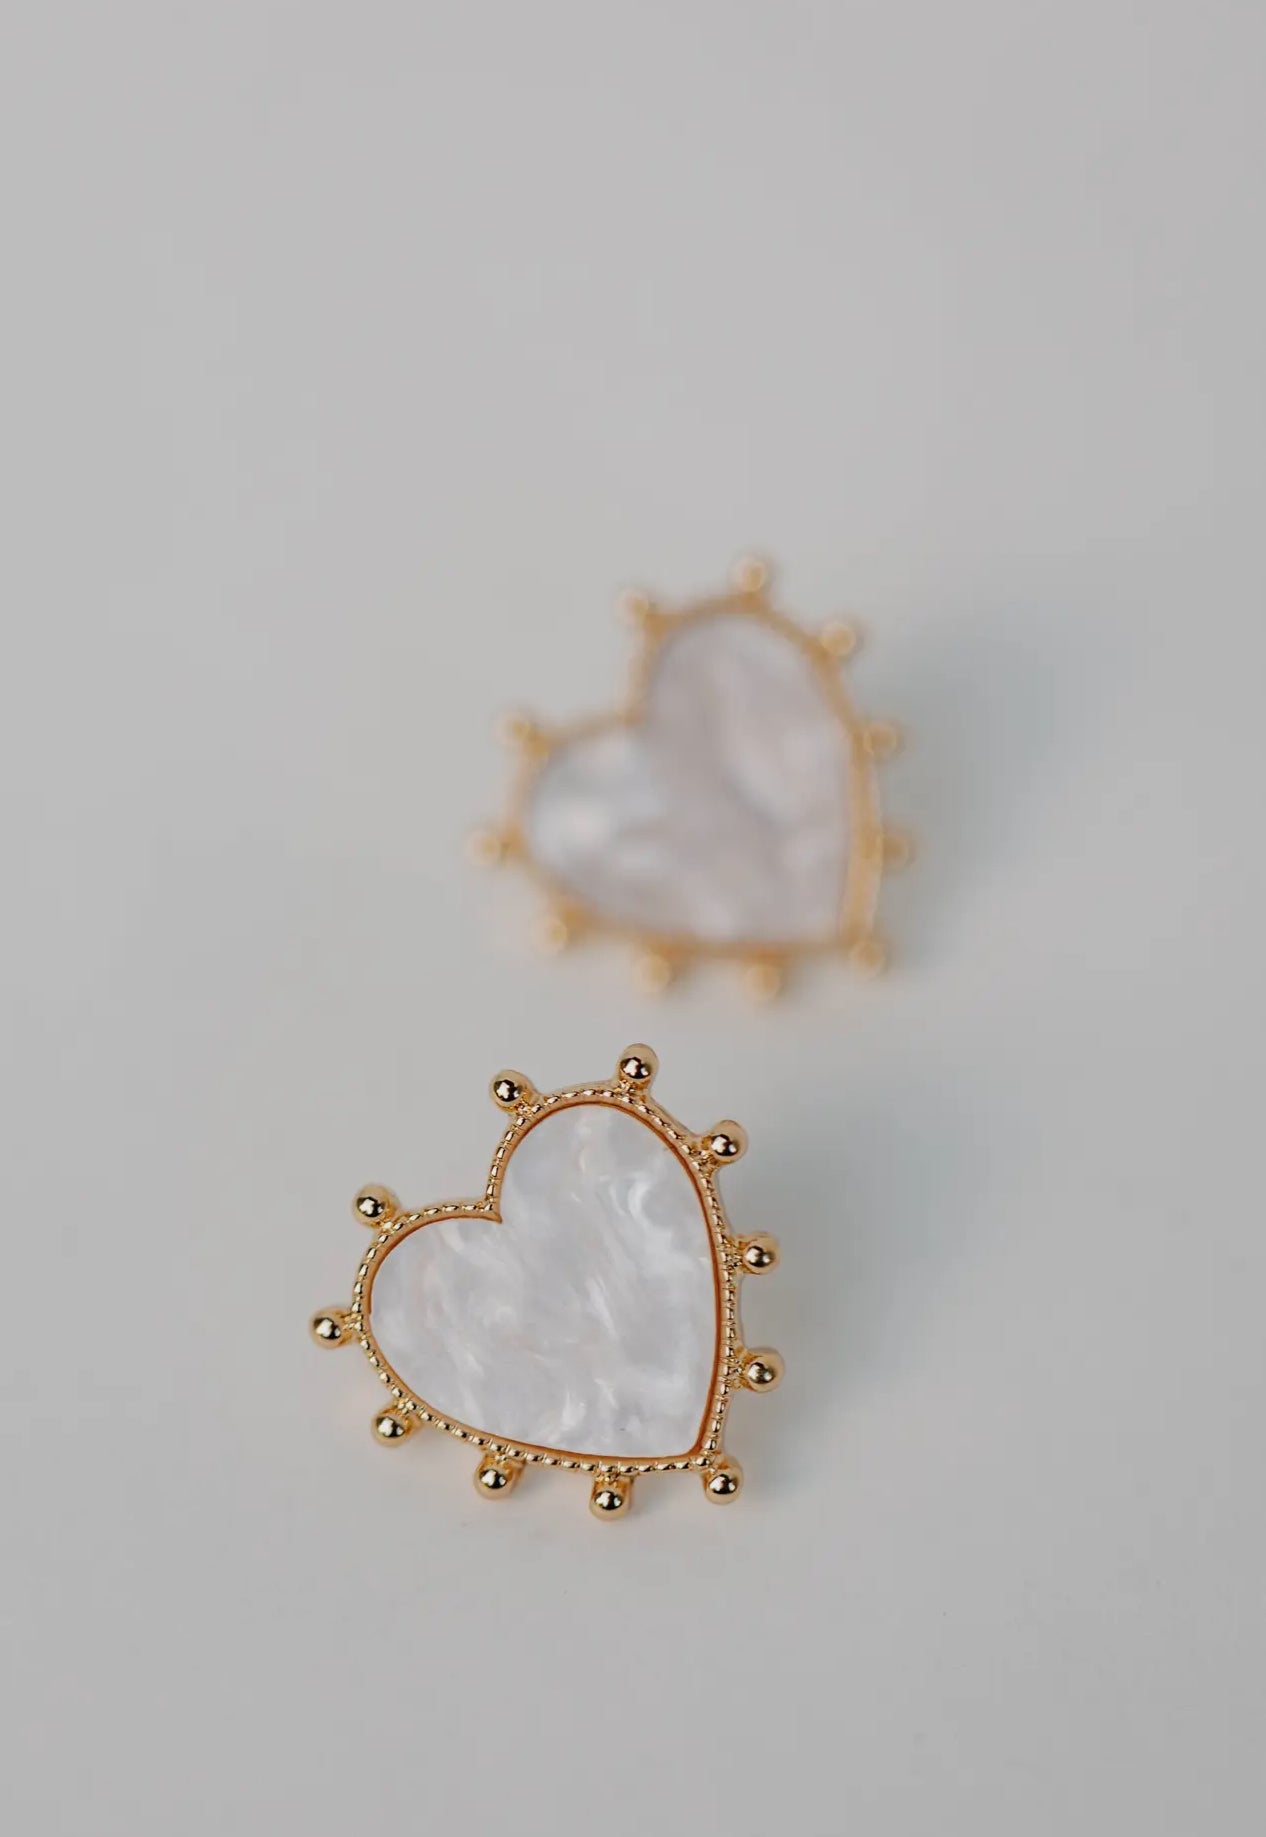 St Armands Gold Studded Pink Tortoise Heart Earrings